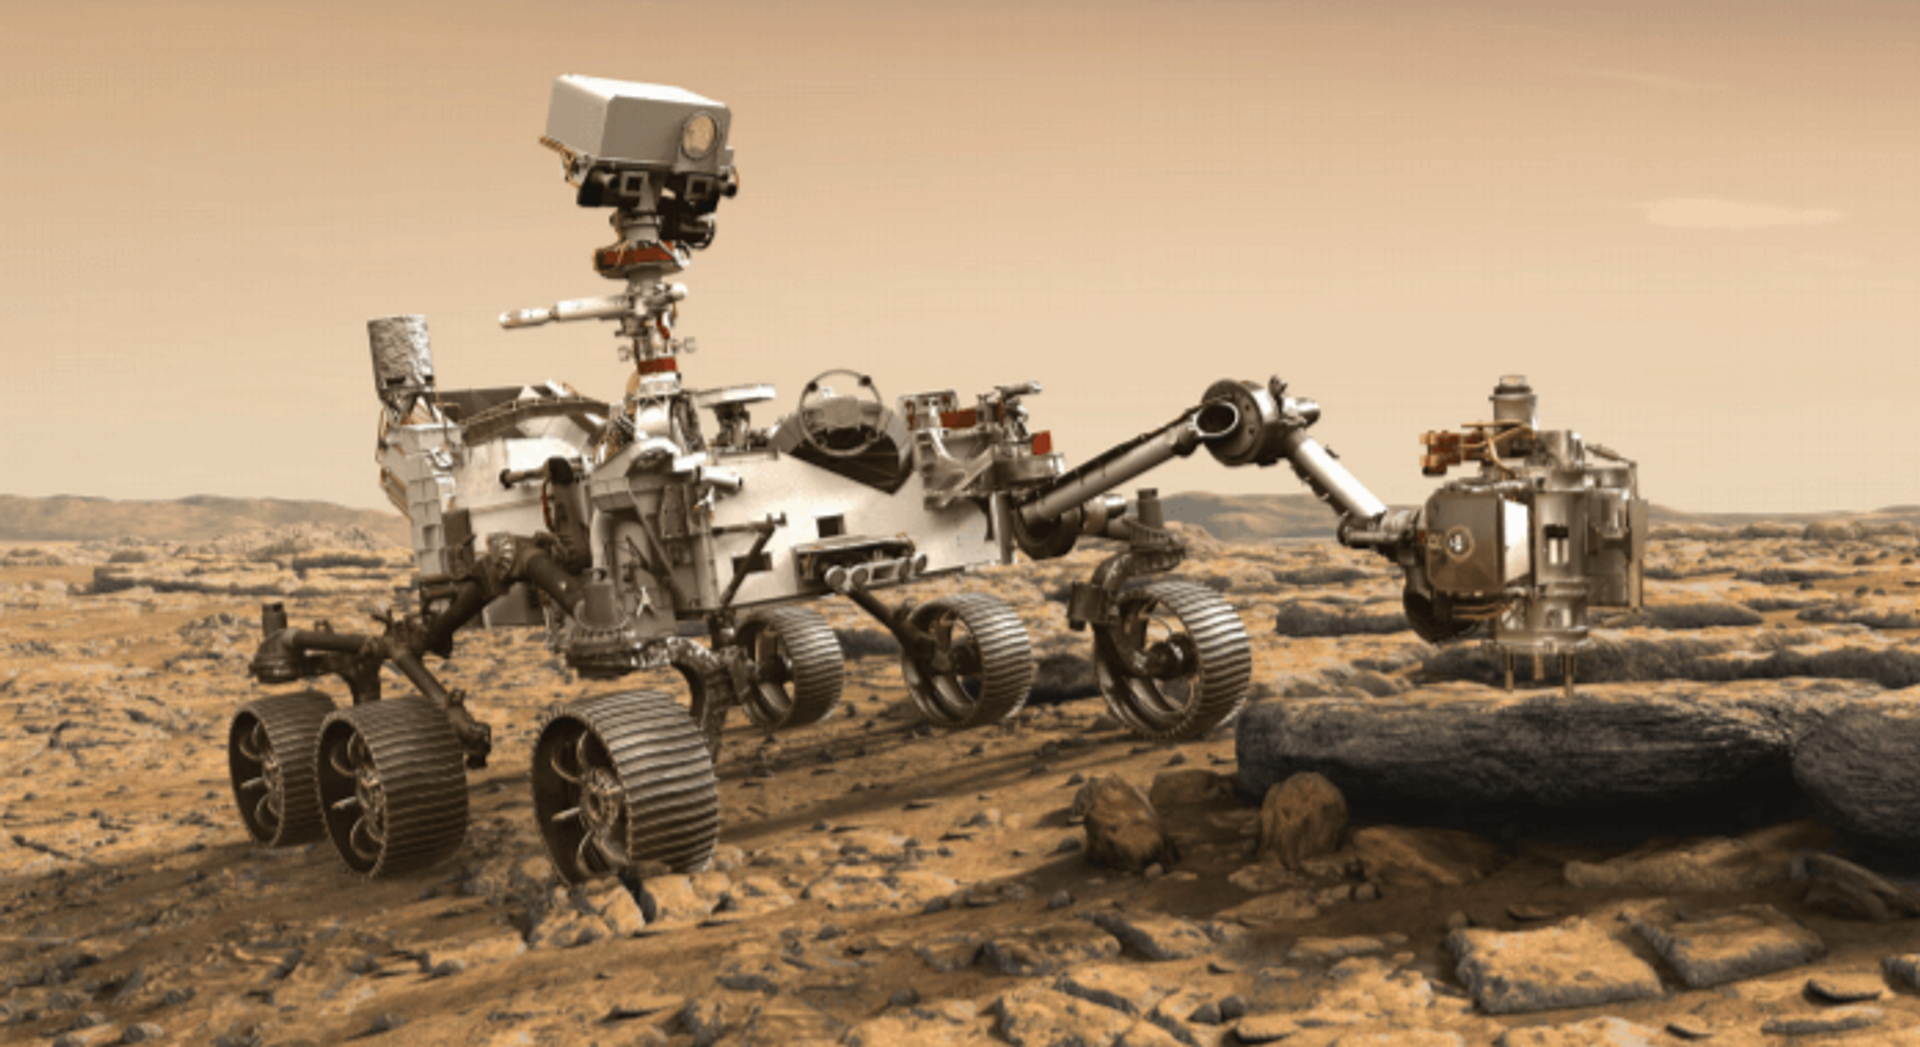 Mars 2020 Perseverance rover image